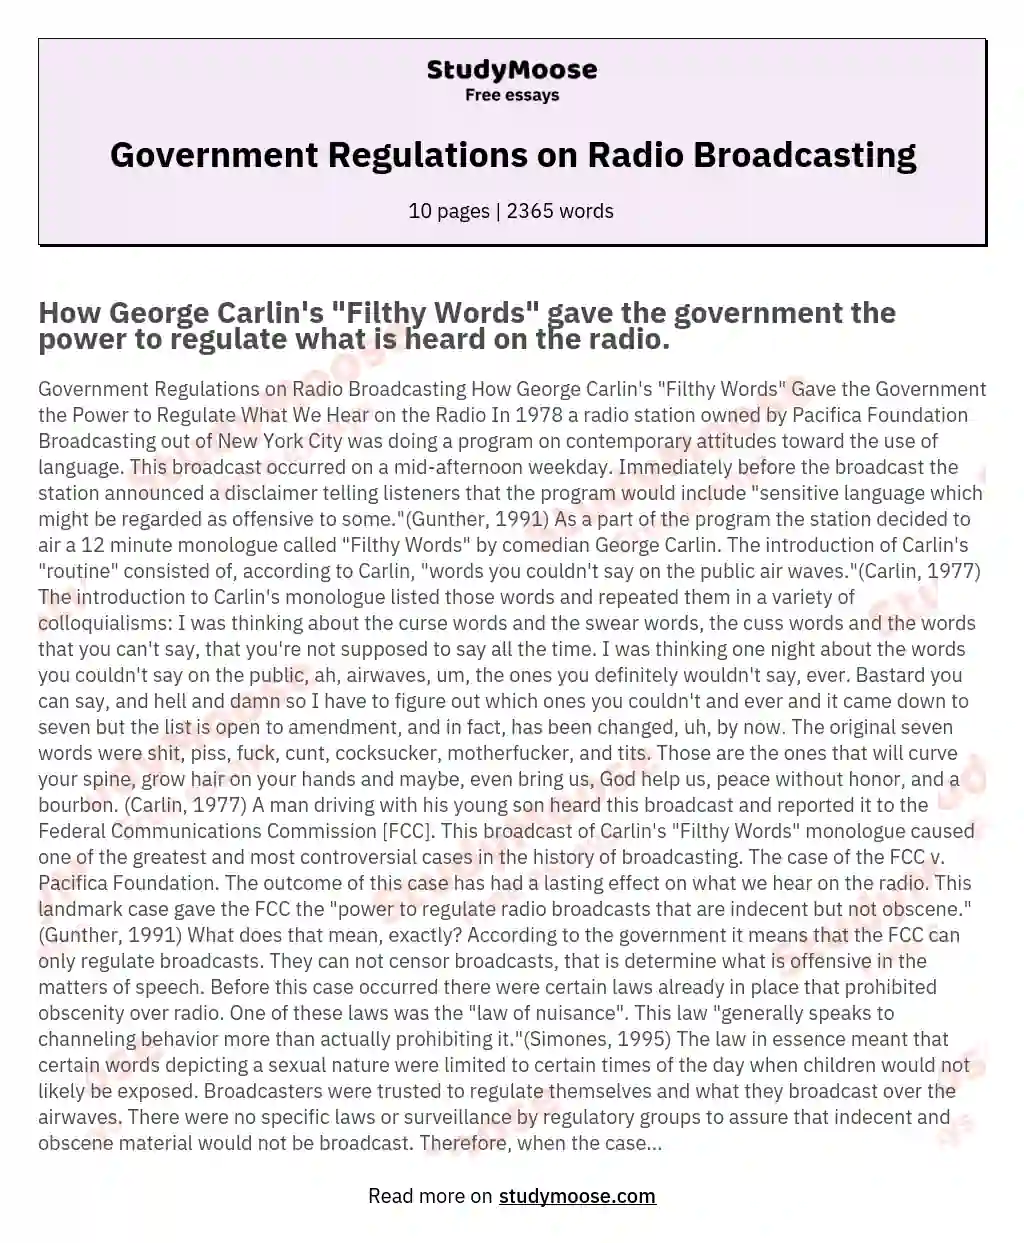 Government Regulations on Radio Broadcasting essay